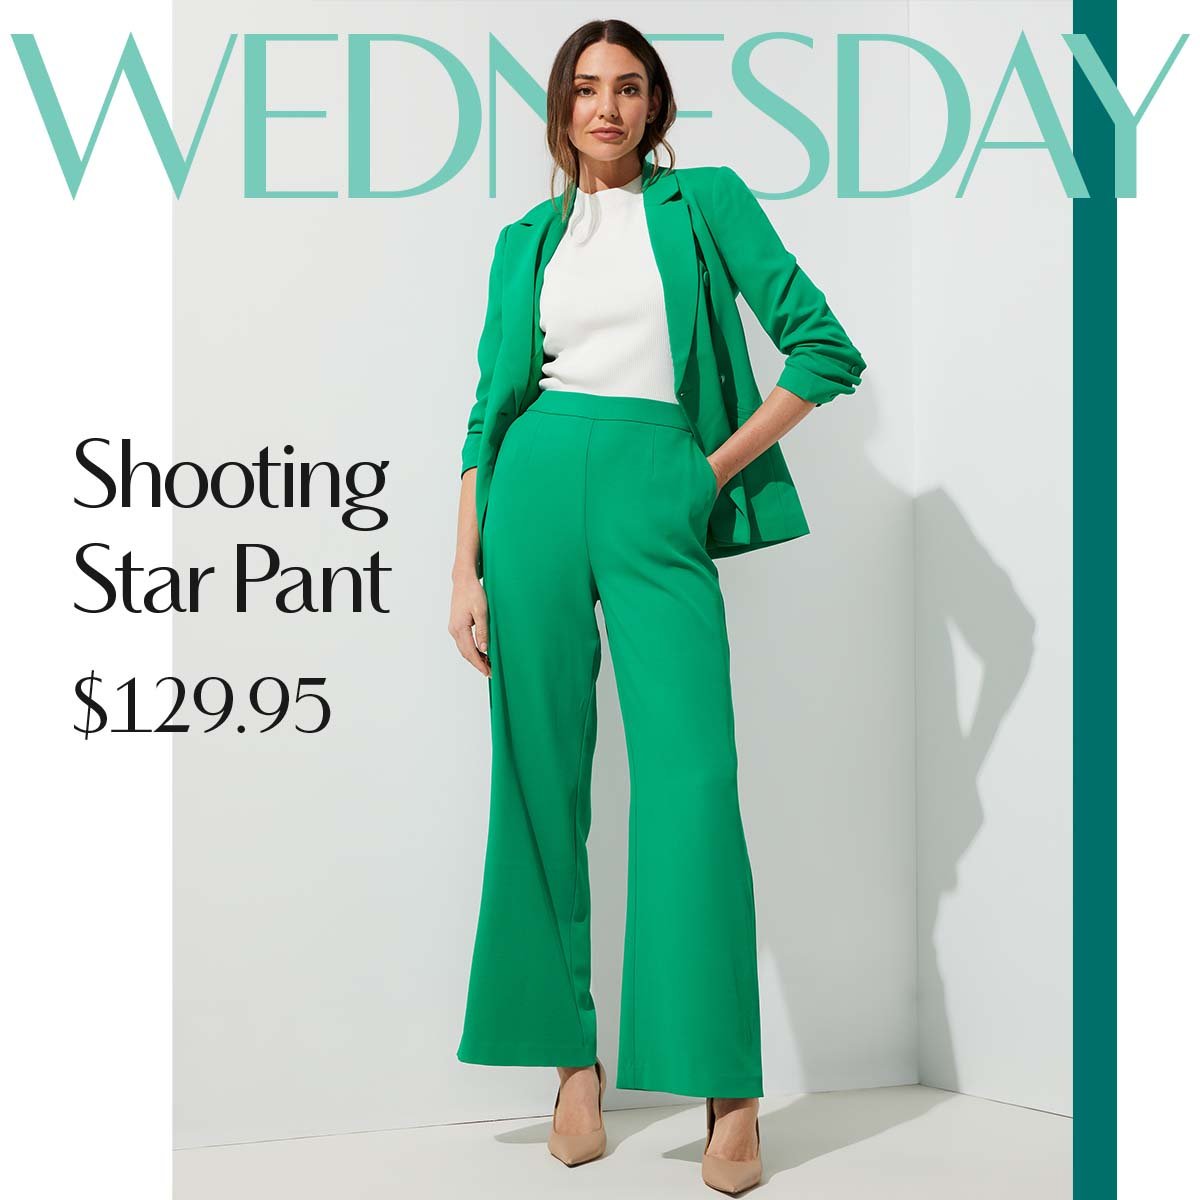 Wednesday. Shooting Star Pant  $129.95